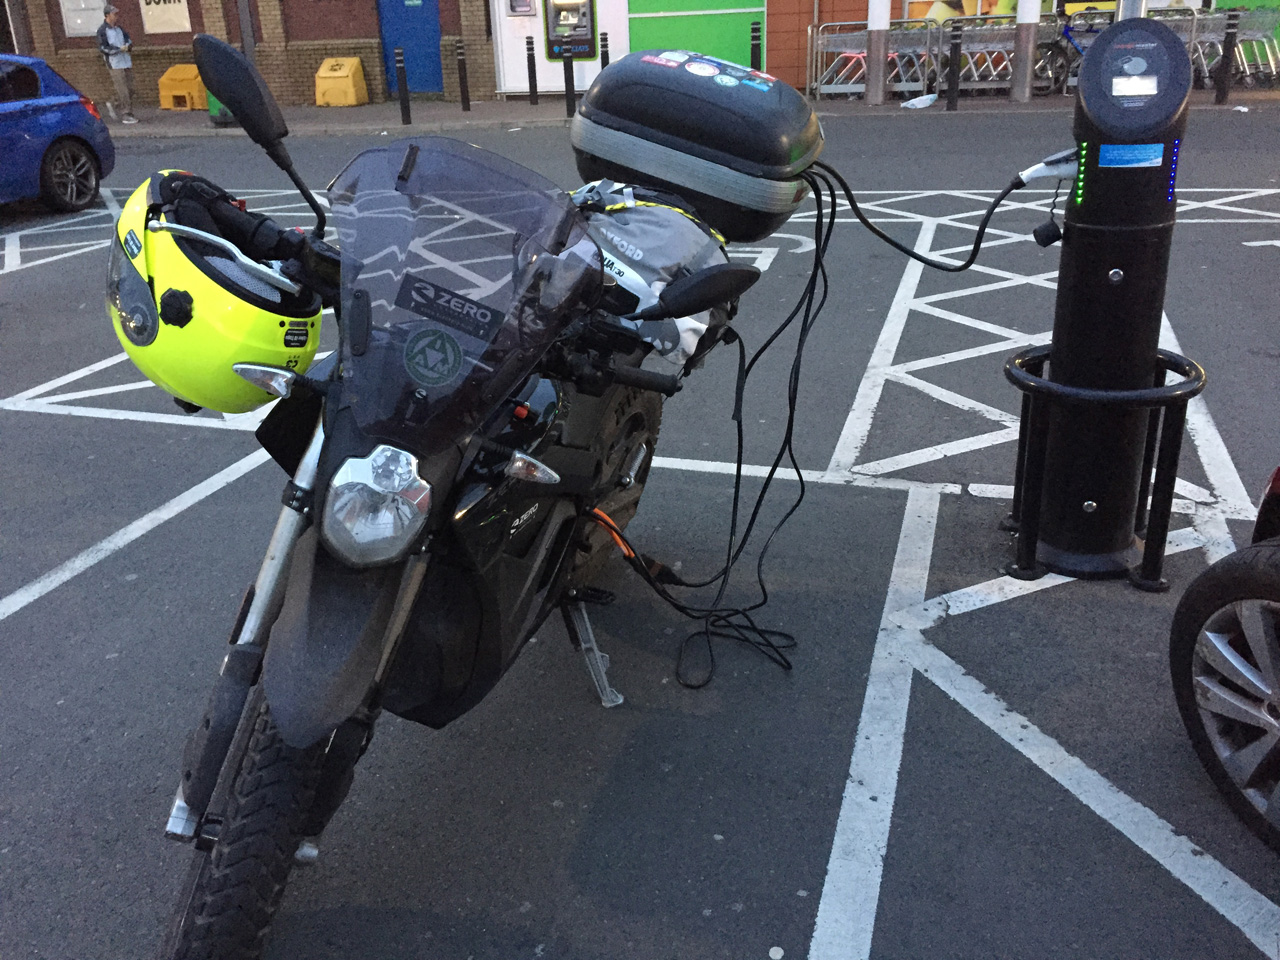 John Chivers' Zero DSR electric motorcycle charging at ASDA, Carlisle.